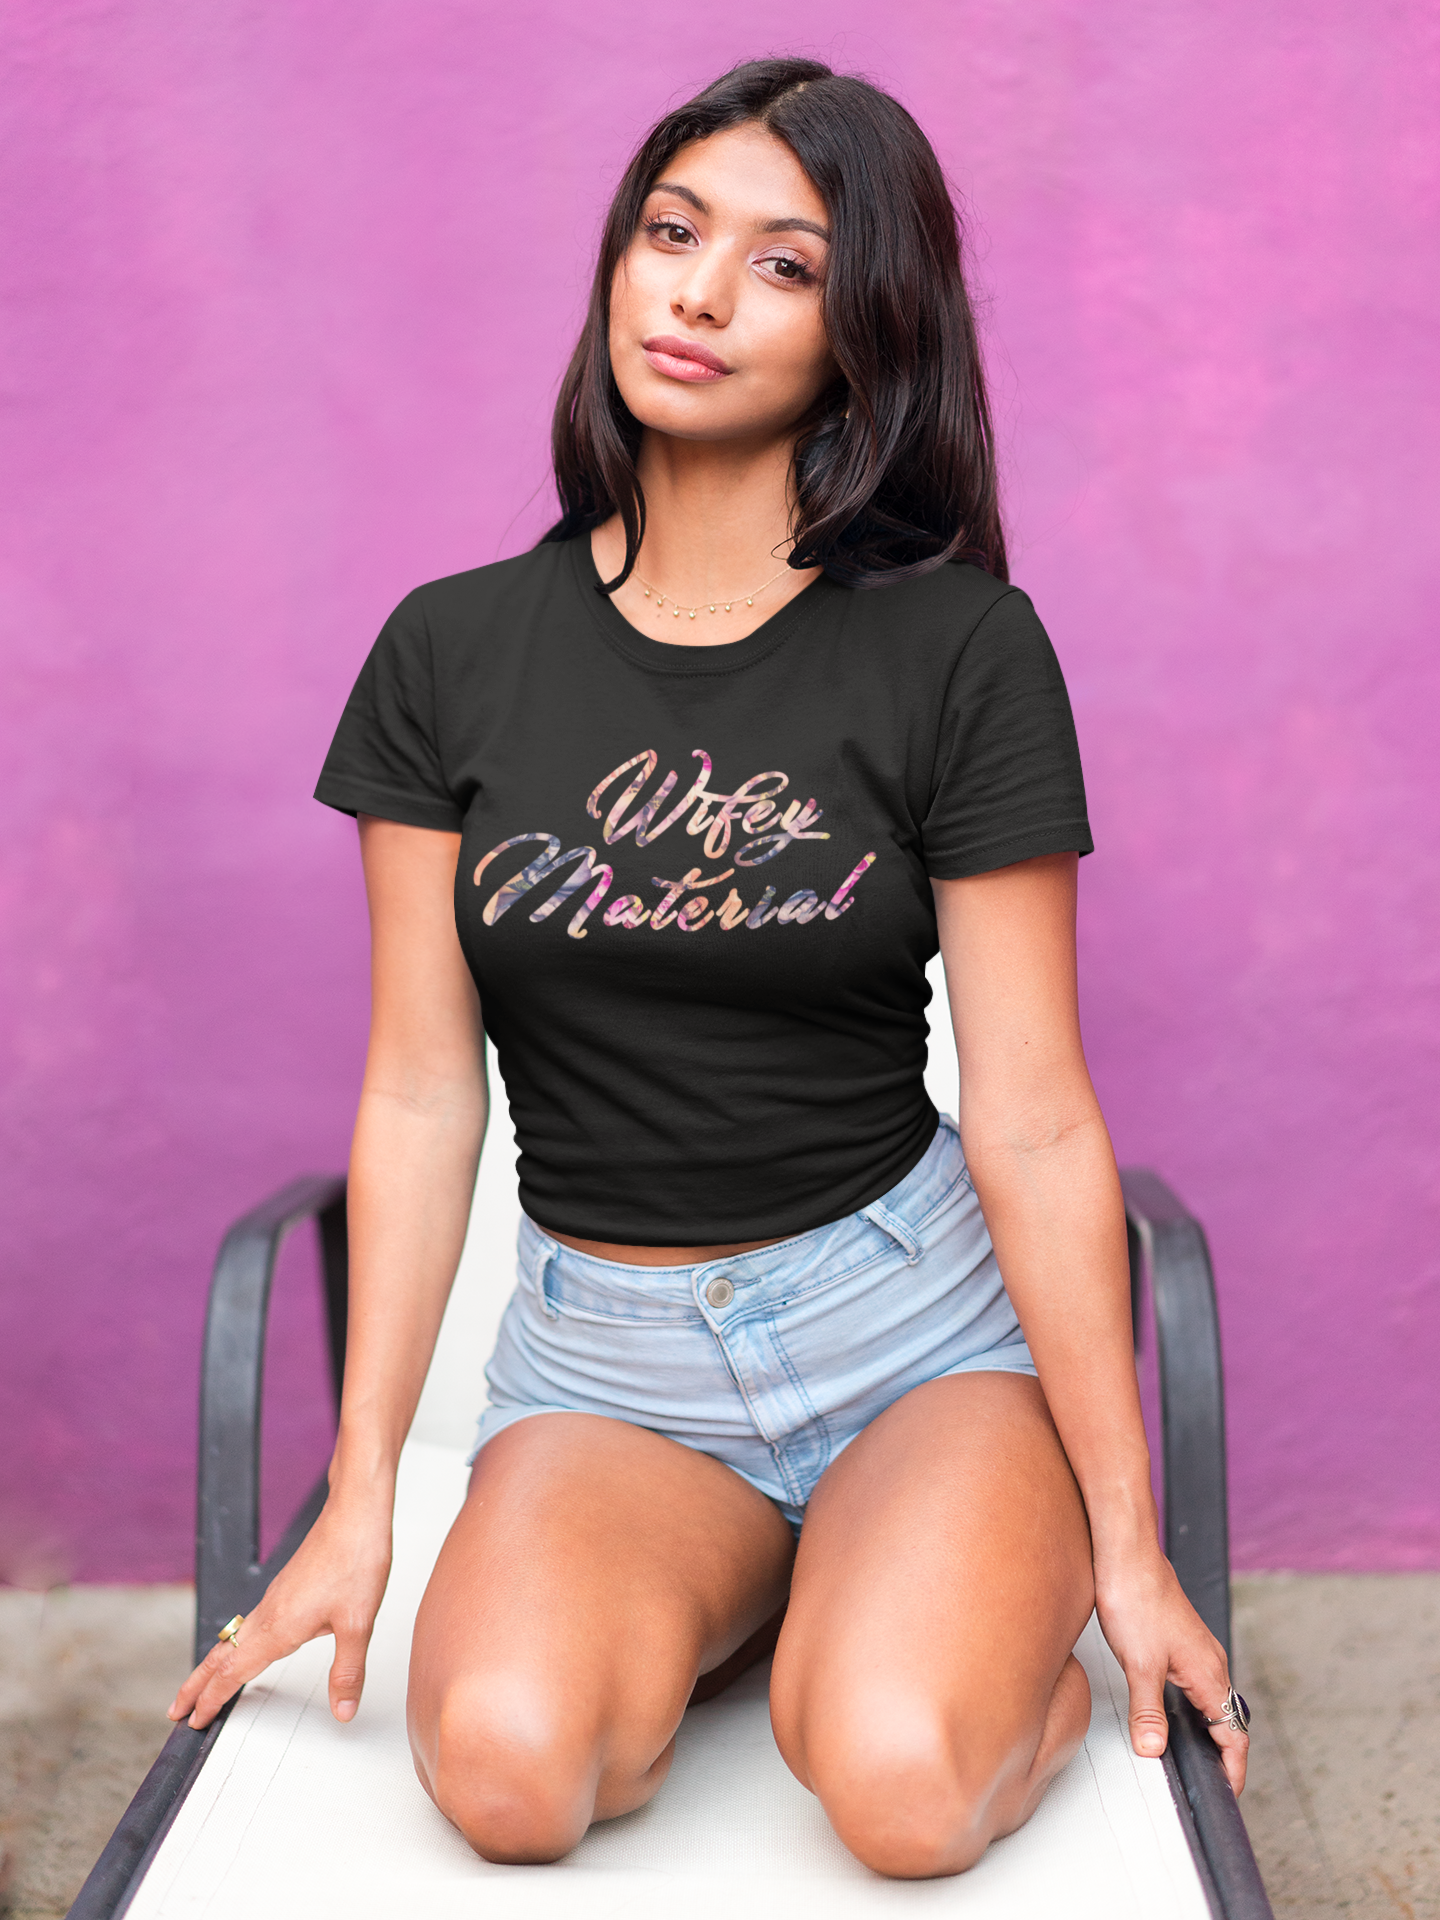 wifey material women's premium t-shirt black fluent clothing